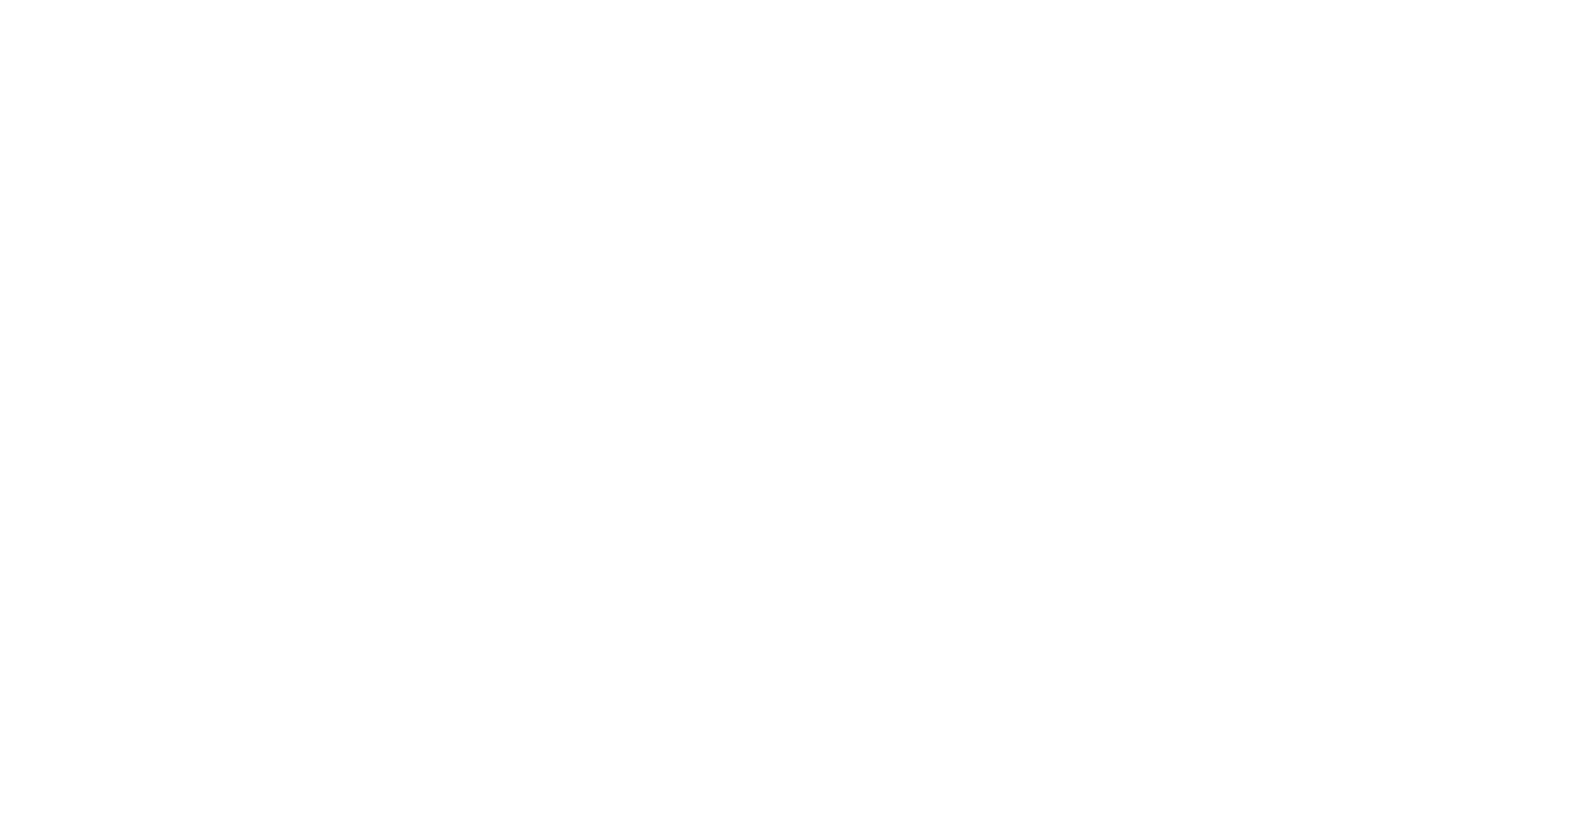 Kuwait Projects Company Holding Logo groß für dunkle Hintergründe (transparentes PNG)